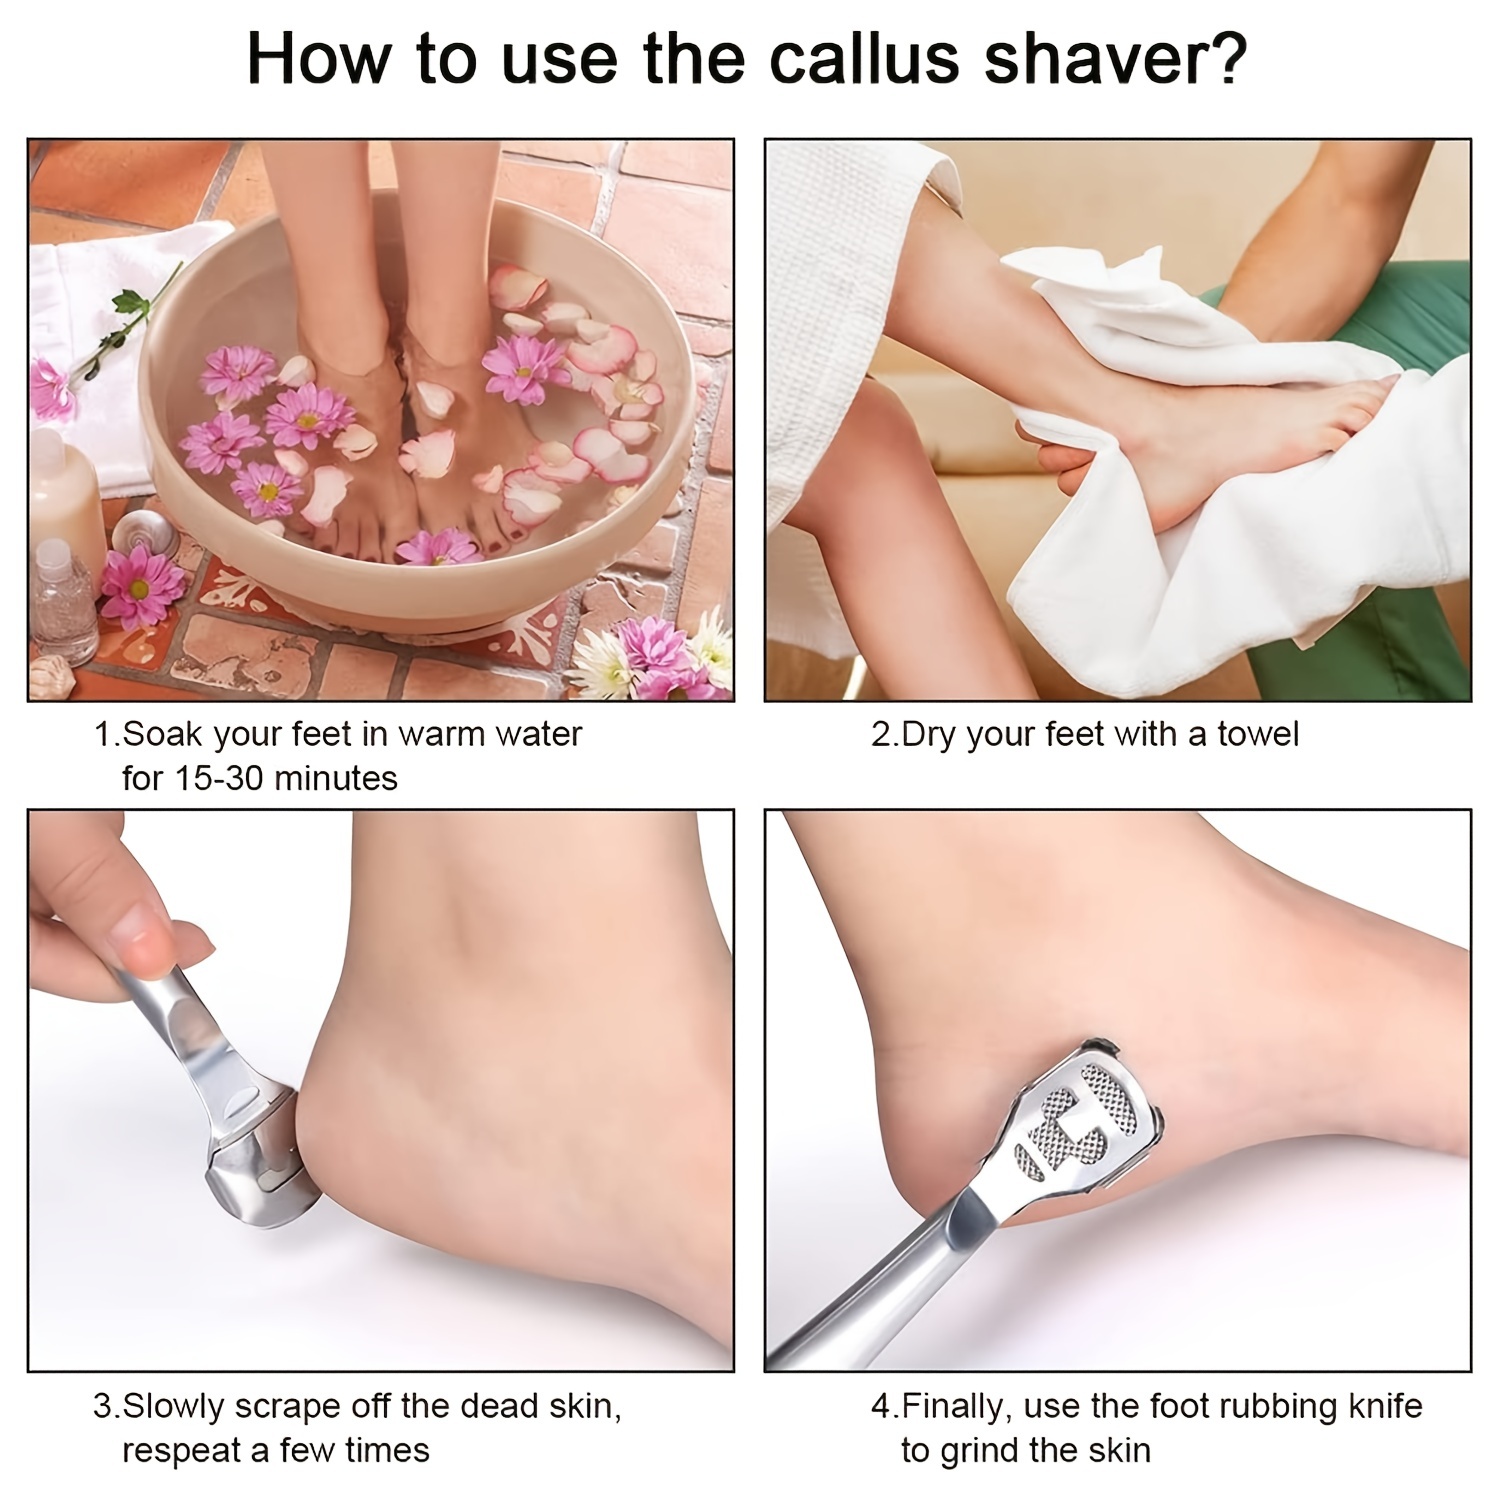 Callus Shaver Sets Include 10 Replacement Callus Shavers Foot Care